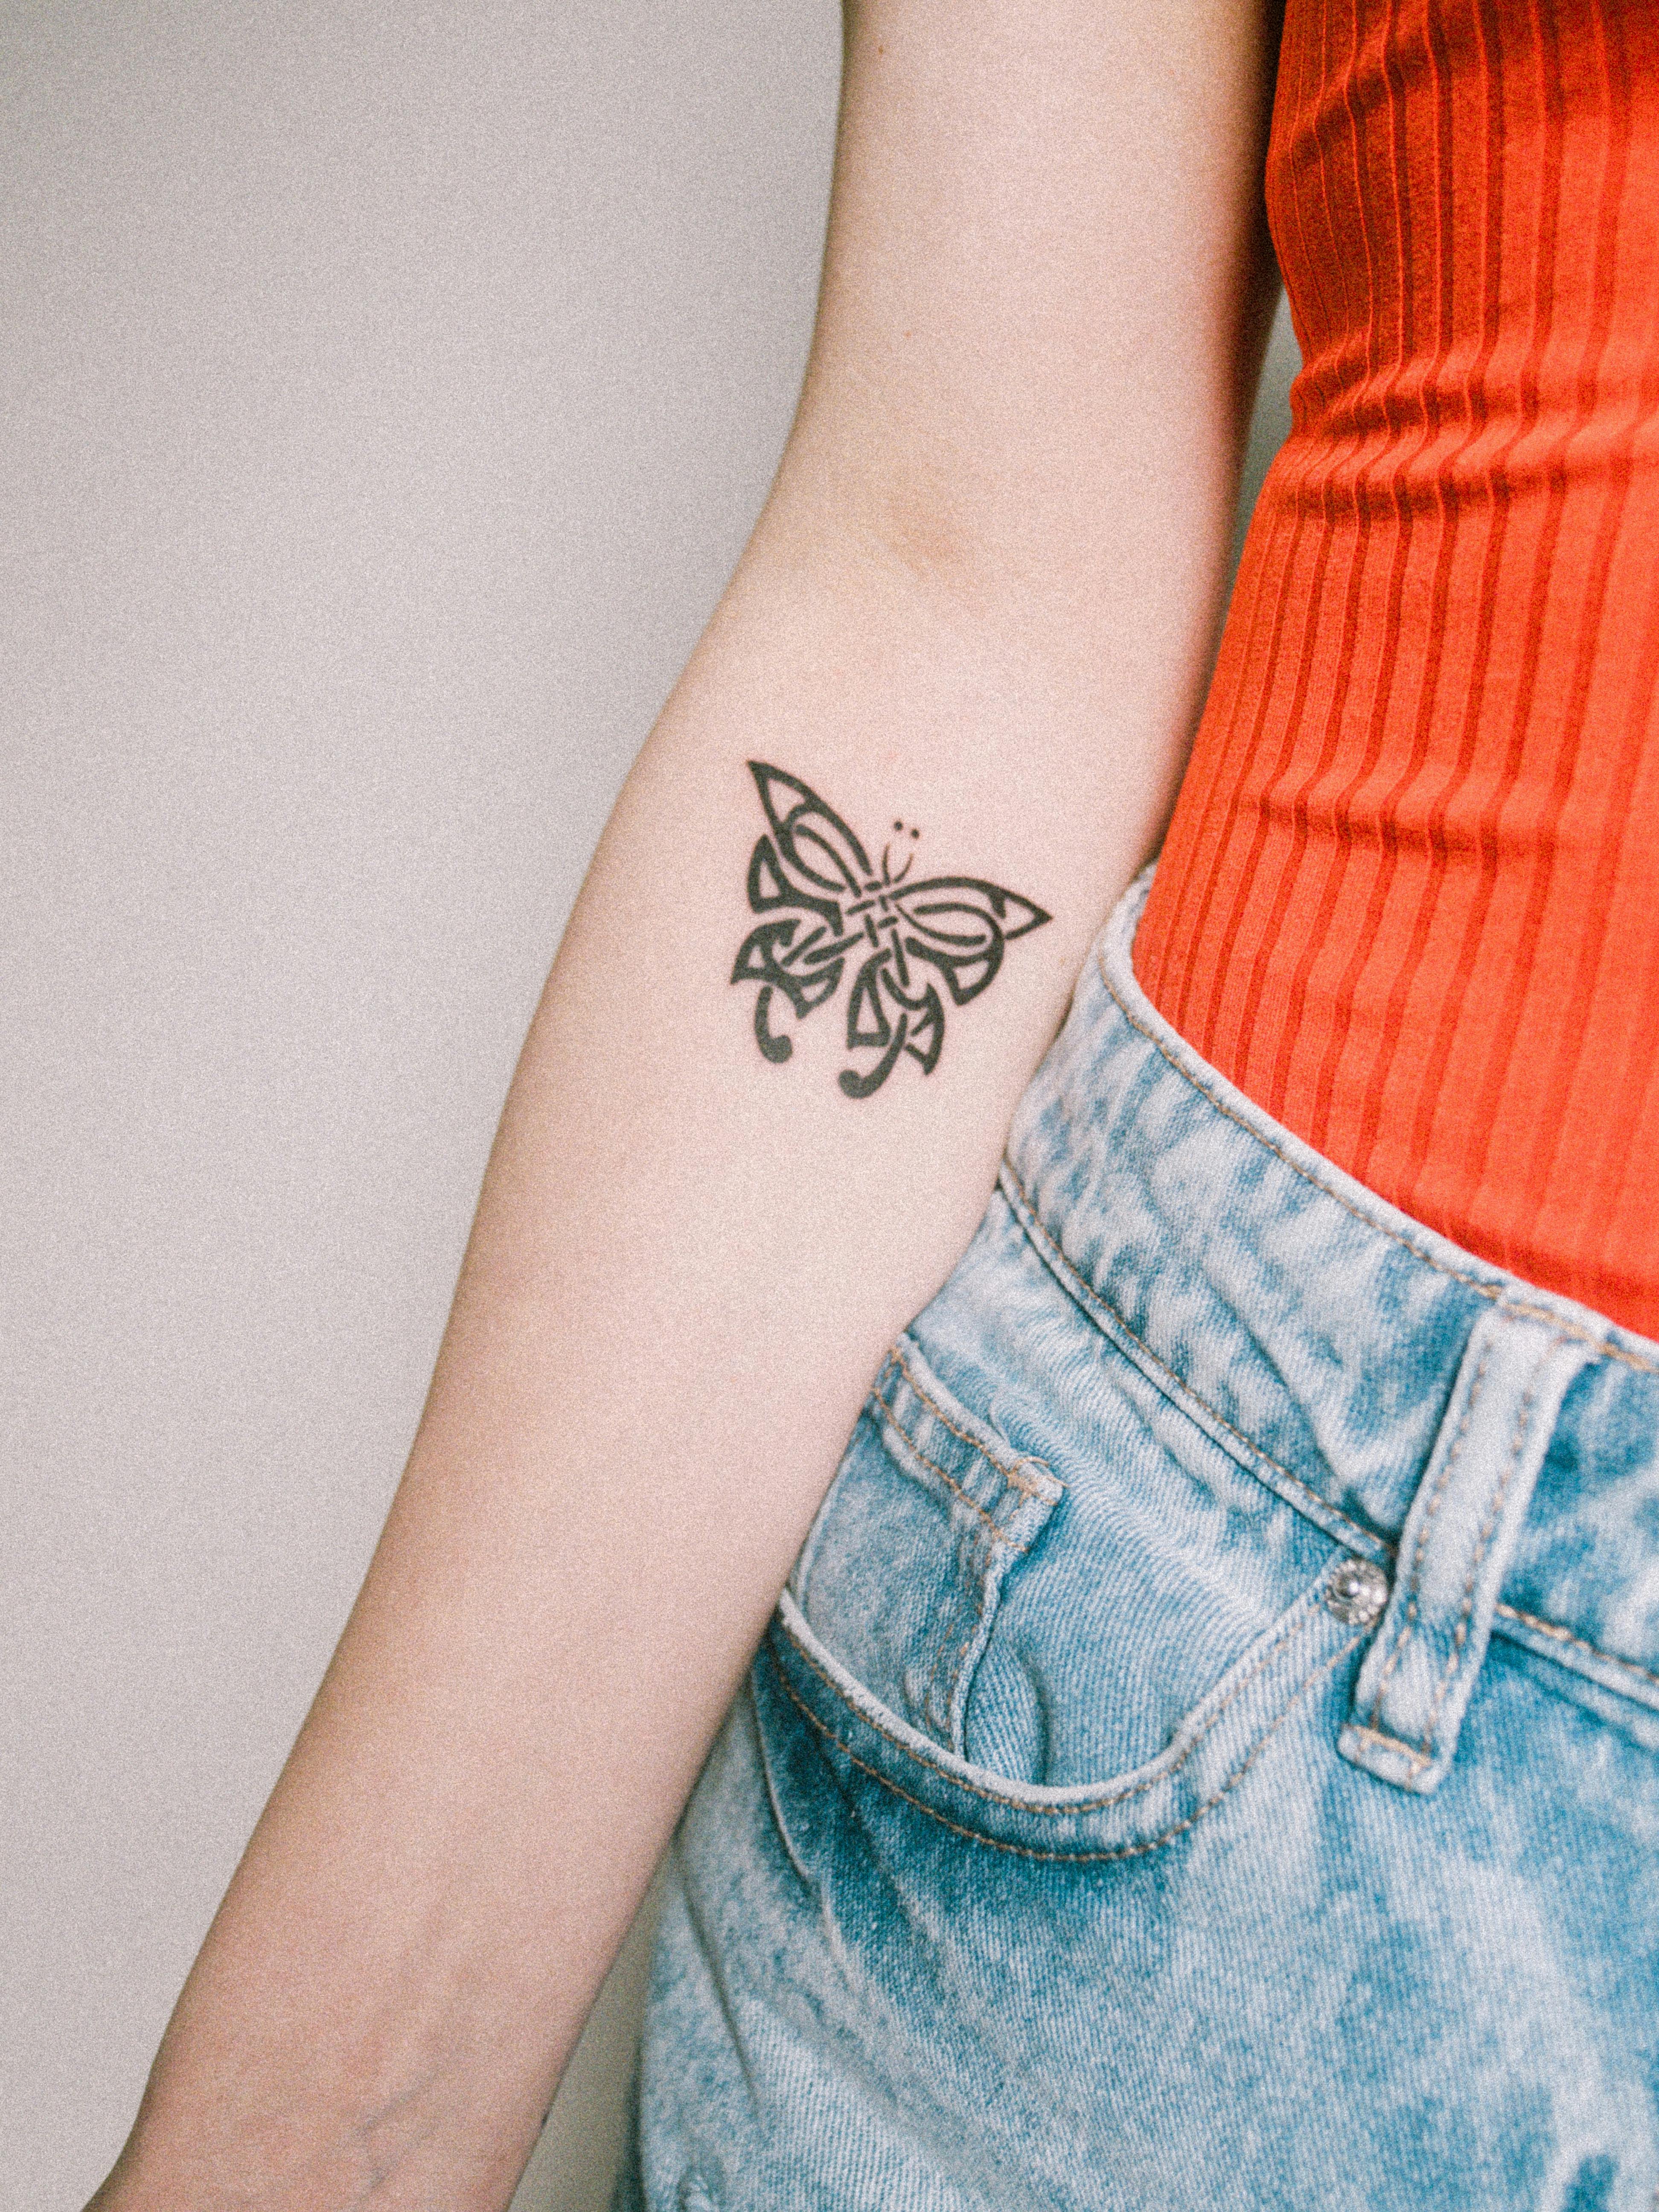 tiny butterfly tattoos